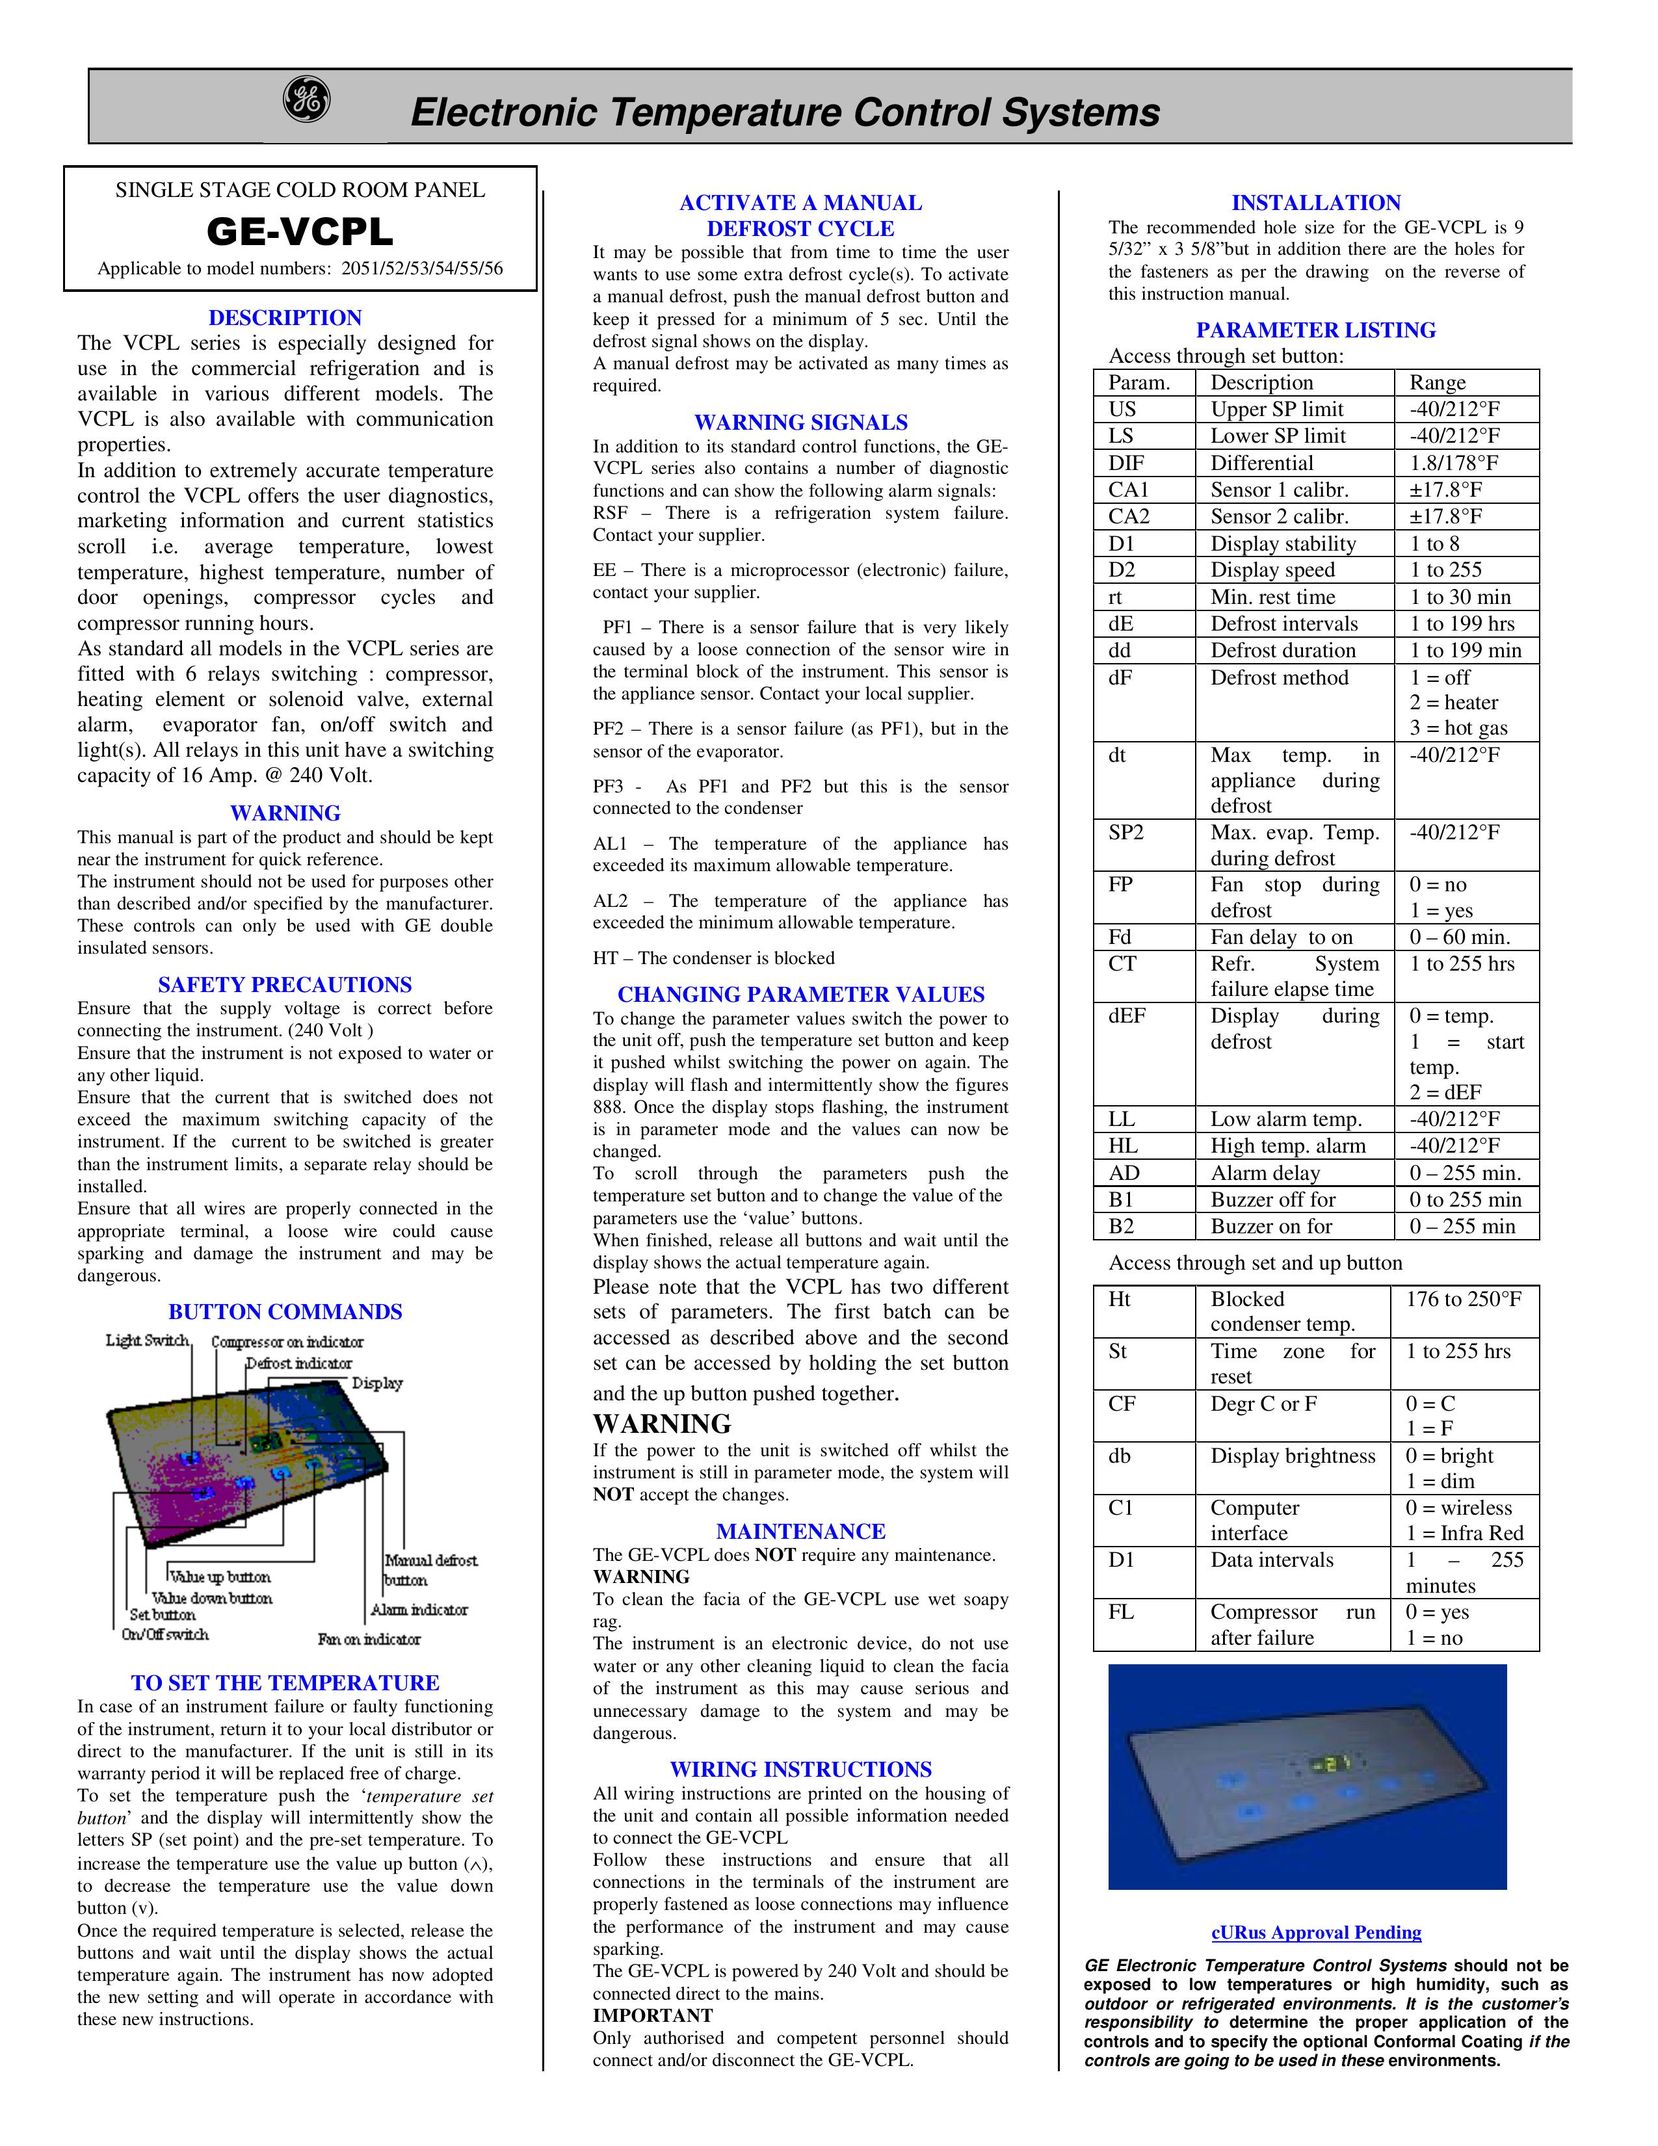 GE GE-VCPL Humidifier User Manual